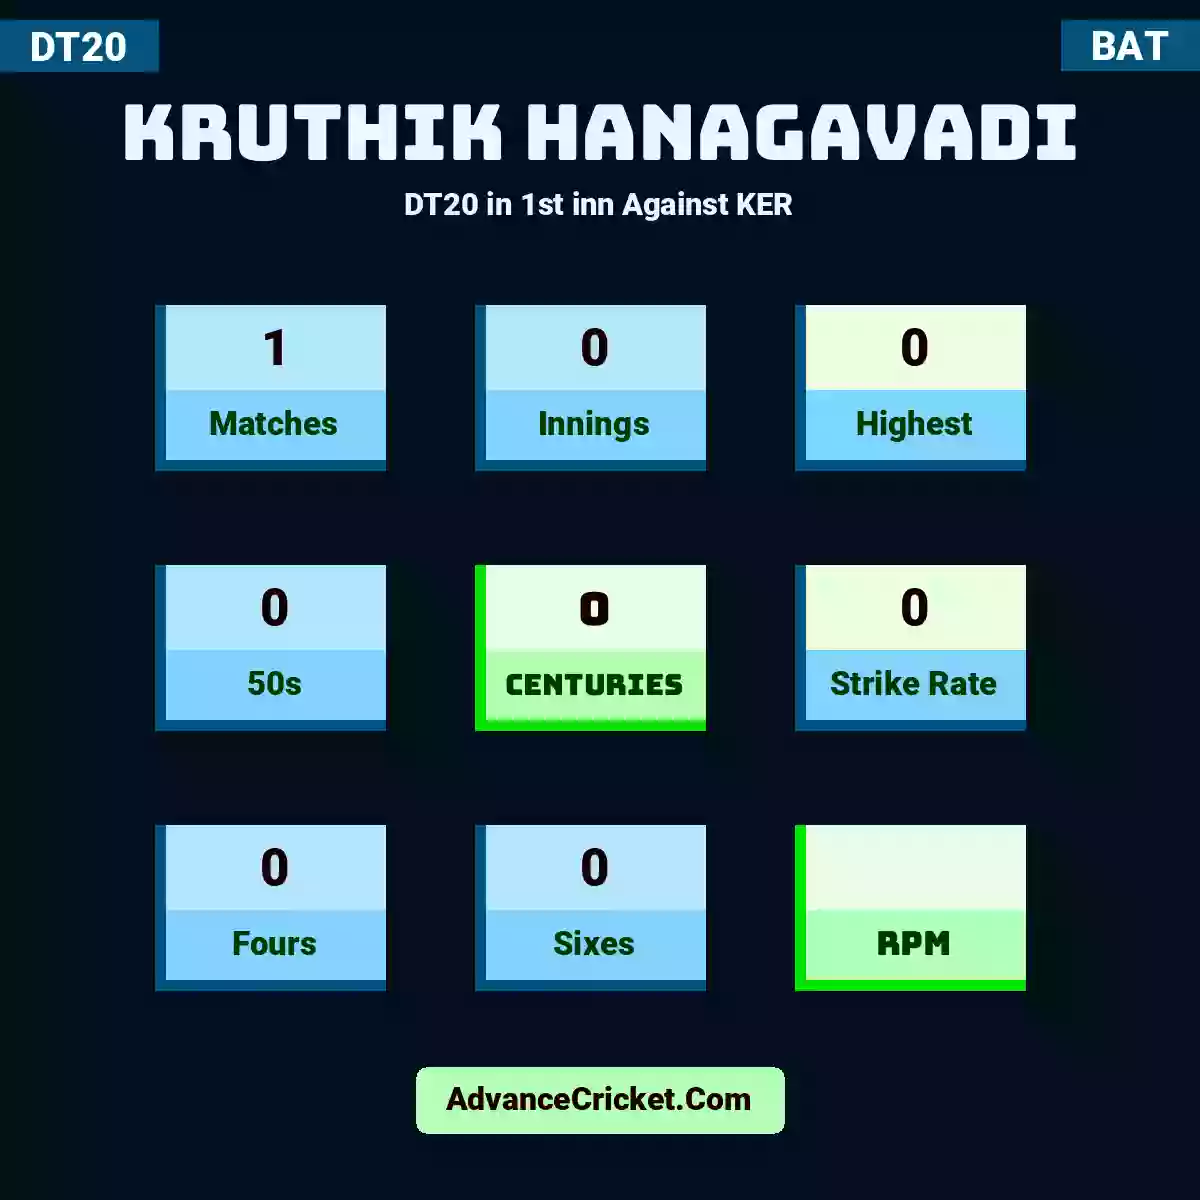 Kruthik Hanagavadi DT20  in 1st inn Against KER, Kruthik Hanagavadi played 1 matches, scored 0 runs as highest, 0 half-centuries, and 0 centuries, with a strike rate of 0. K.Hanagavadi hit 0 fours and 0 sixes.